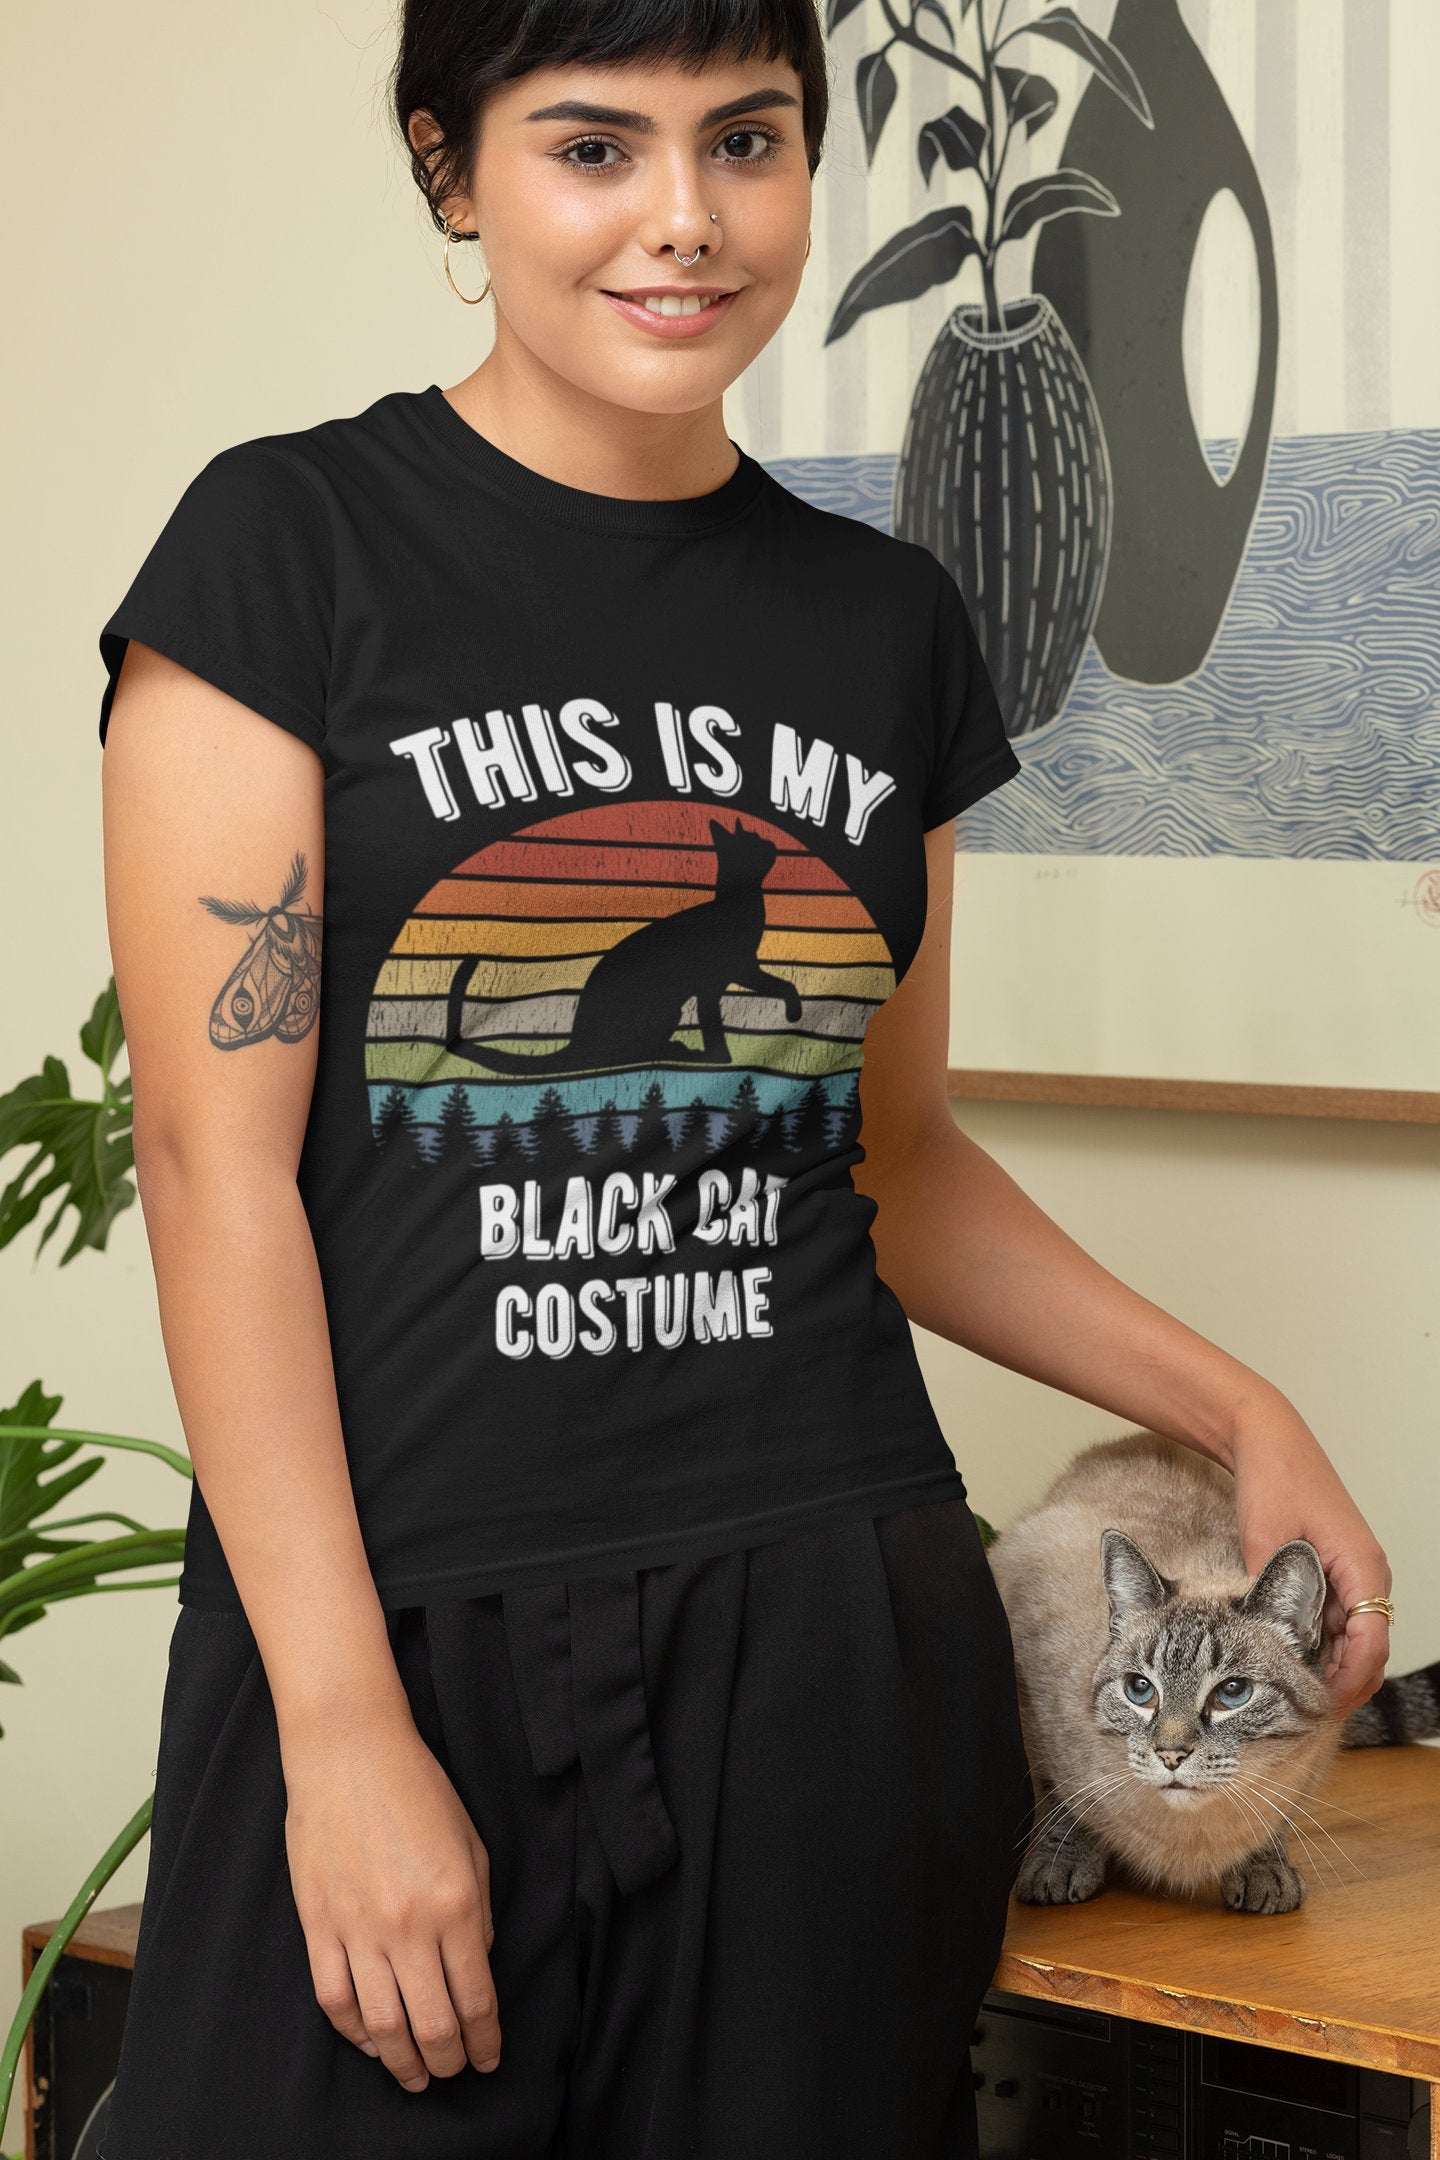 Retro Vintage This Is My Black Cat Costume Kitten Cat Lover Gift Short-Sleeve Unisex T-Shirt